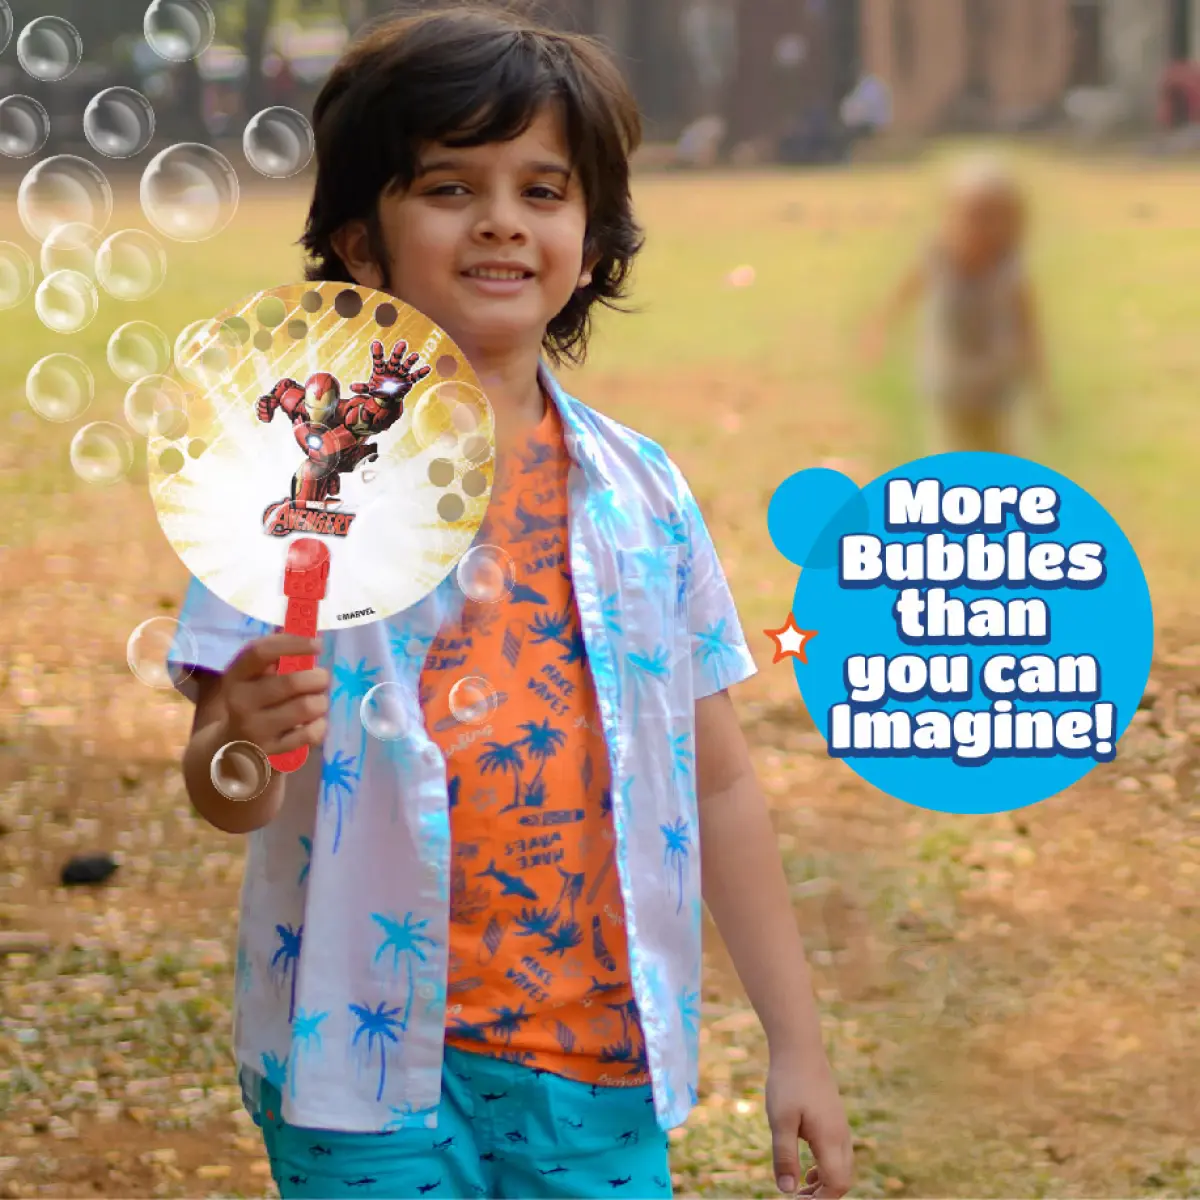 Bubble Magic Fan Bubs Iron Man Theme Bubble Solution For Kids of Age 3Y+, Multicolour